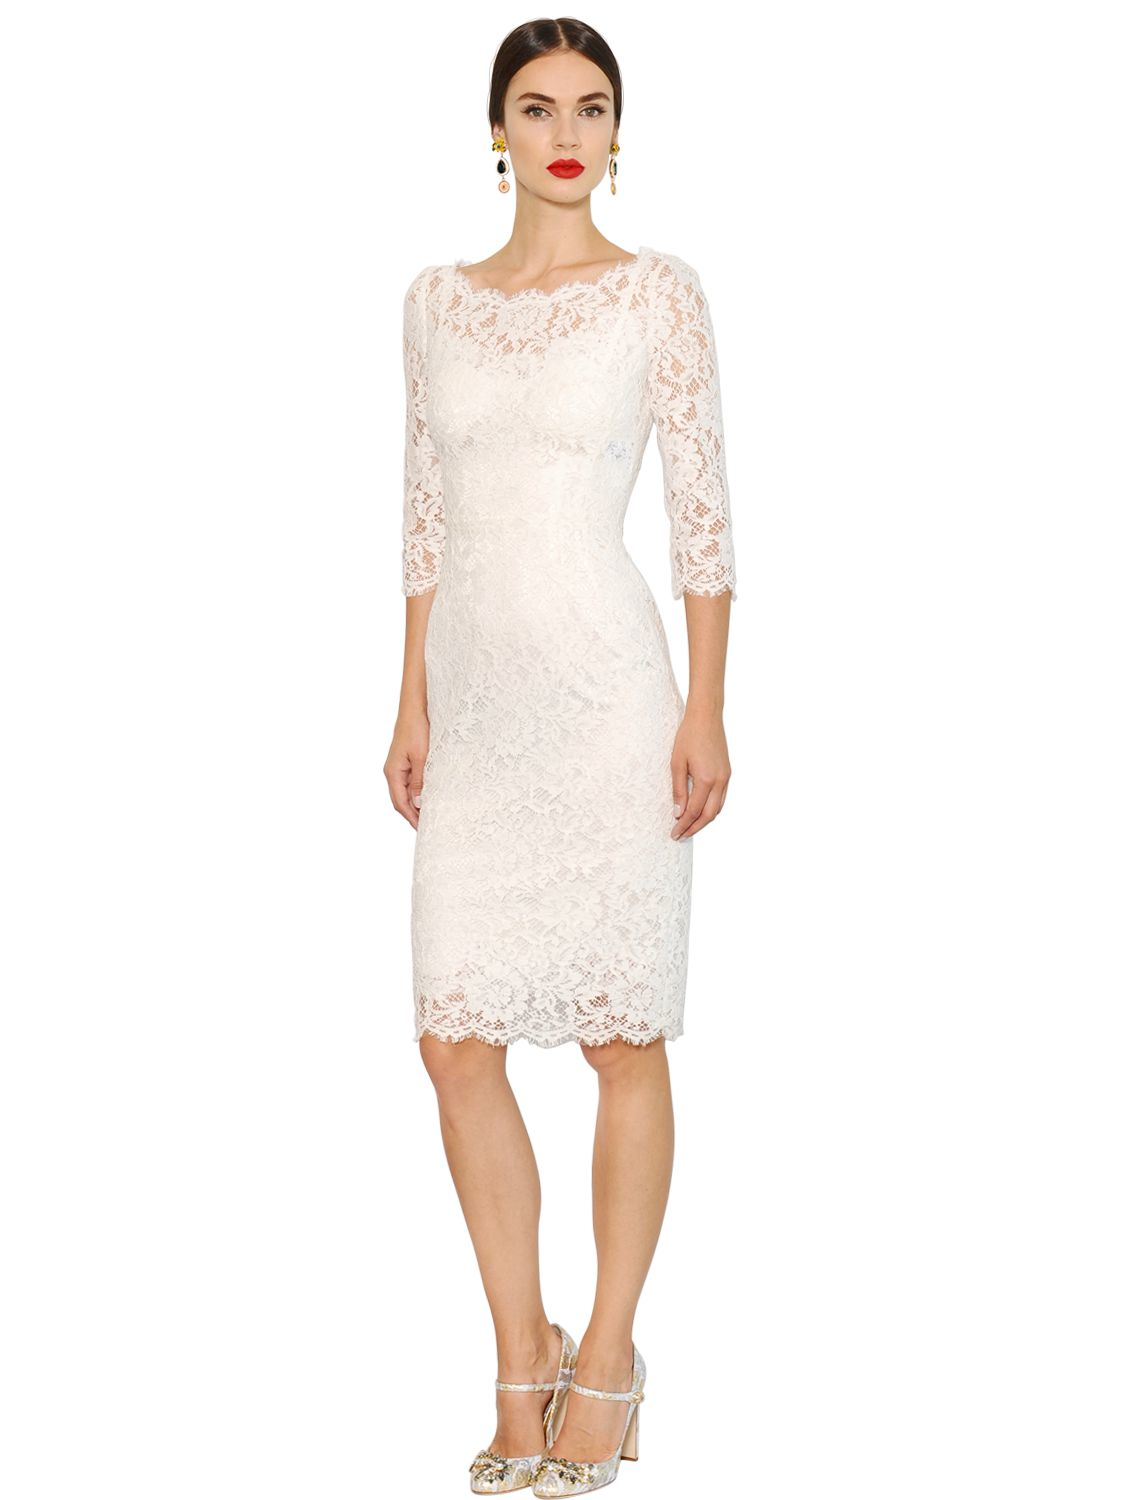 Dolce & Gabbana Cordonetto Lace Dress in White - Lyst